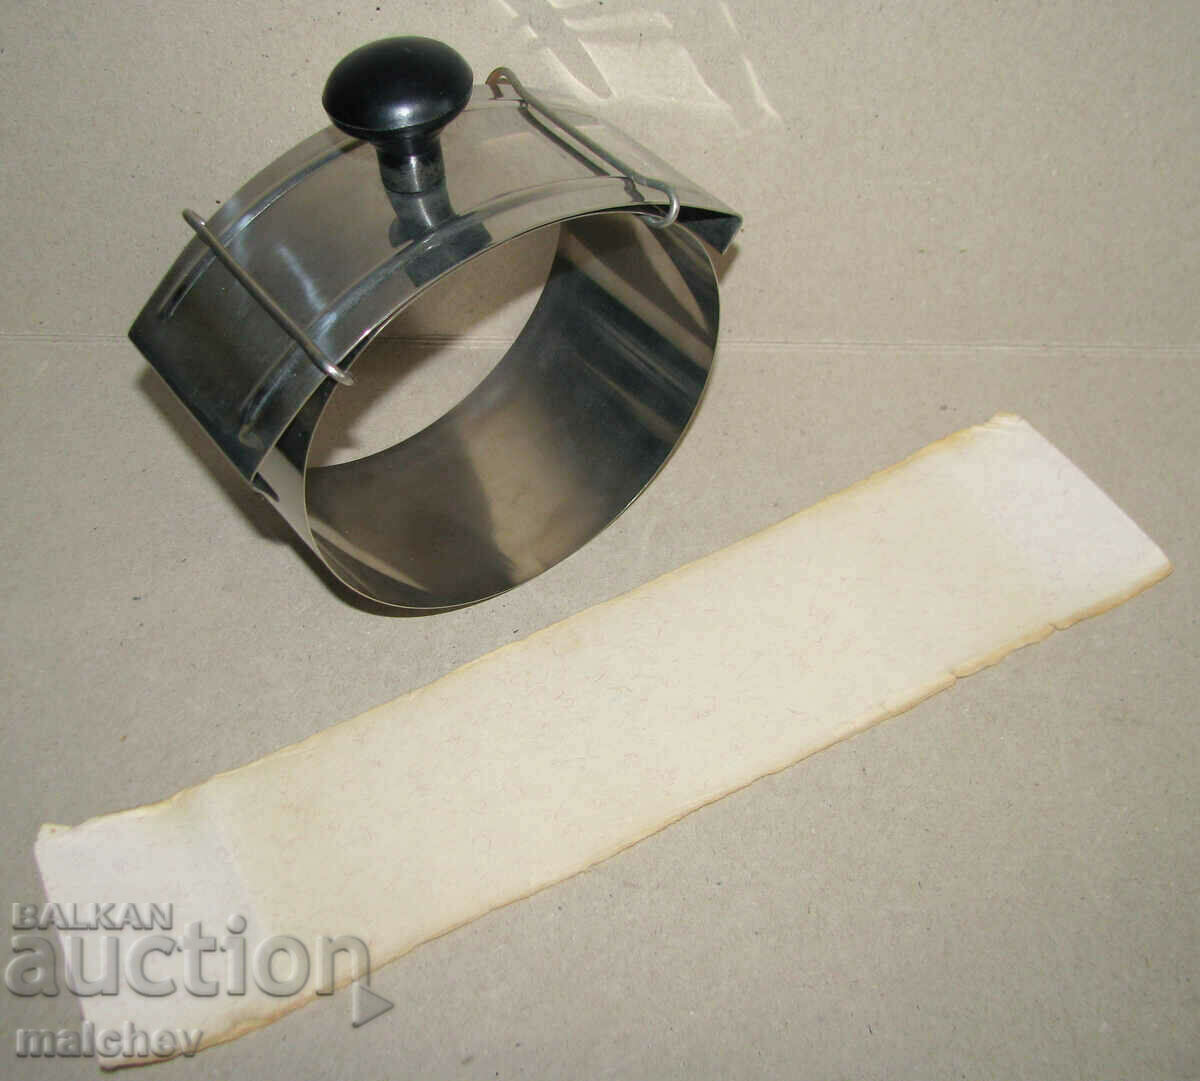 Stainless steel absorbent press with bakelite handle